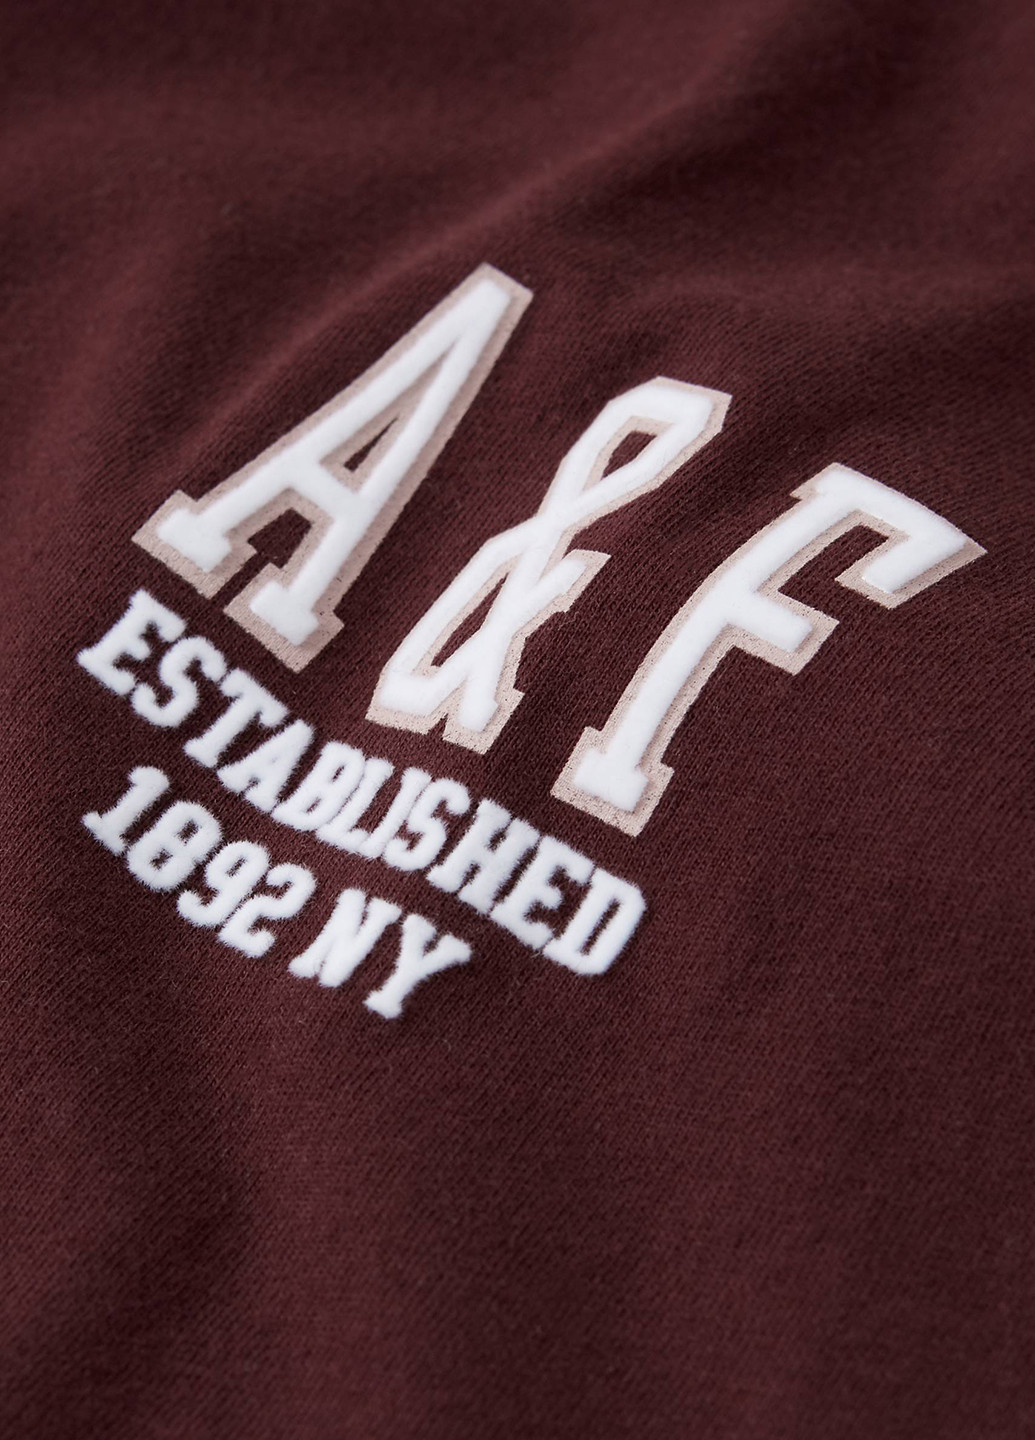 Бордовая летняя футболка Abercrombie & Fitch